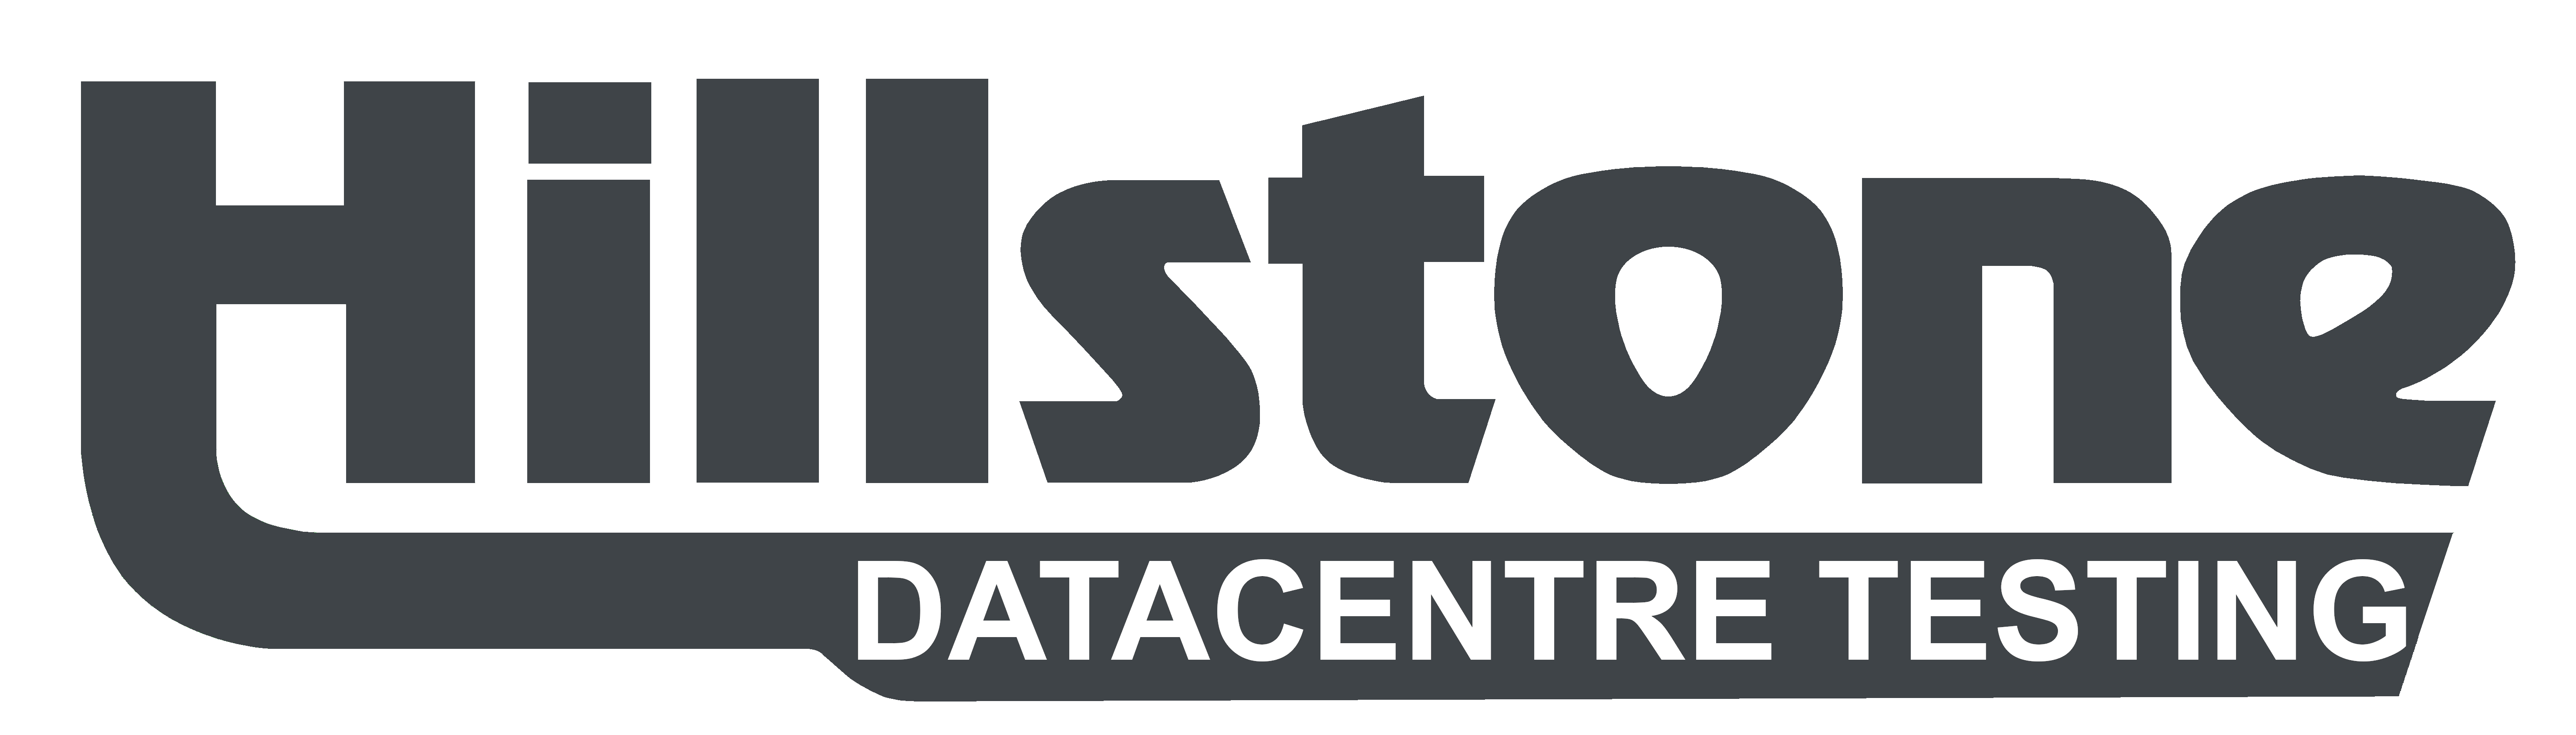 Hillstone Datacentre Testing